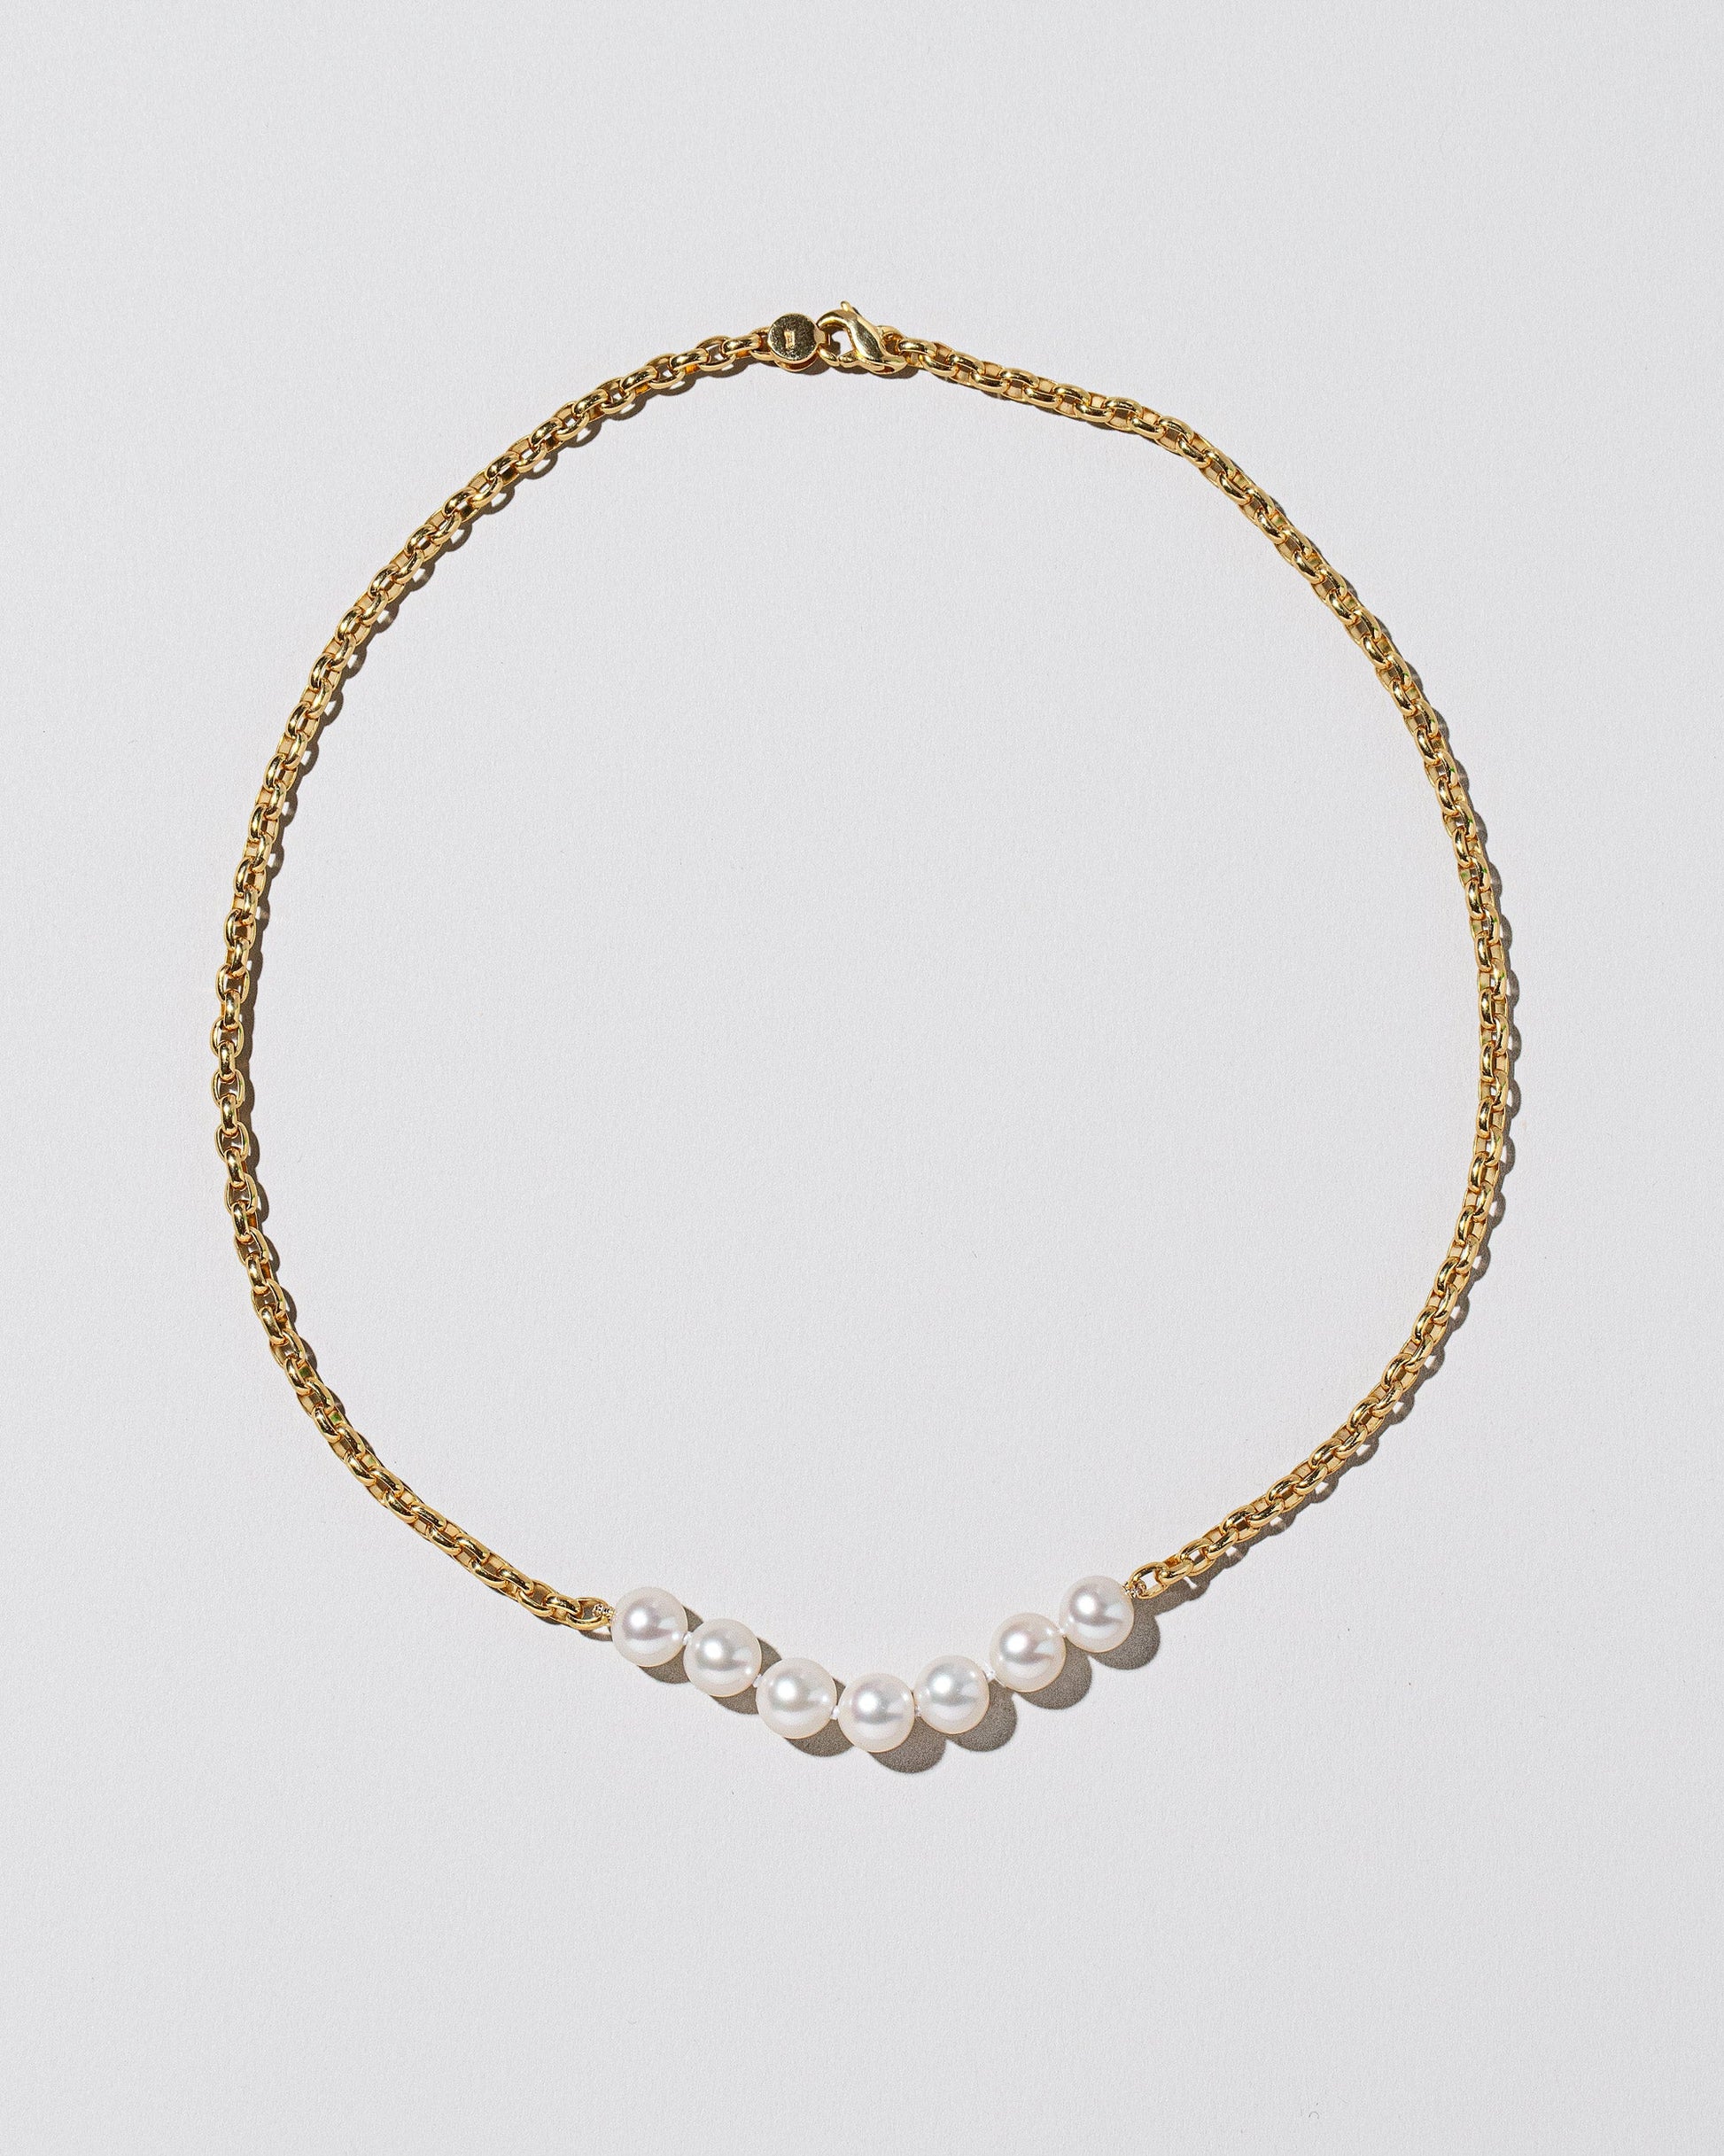 Hook & Eye Clasp for Necklace or Bracelet Add-on – Wisdom River